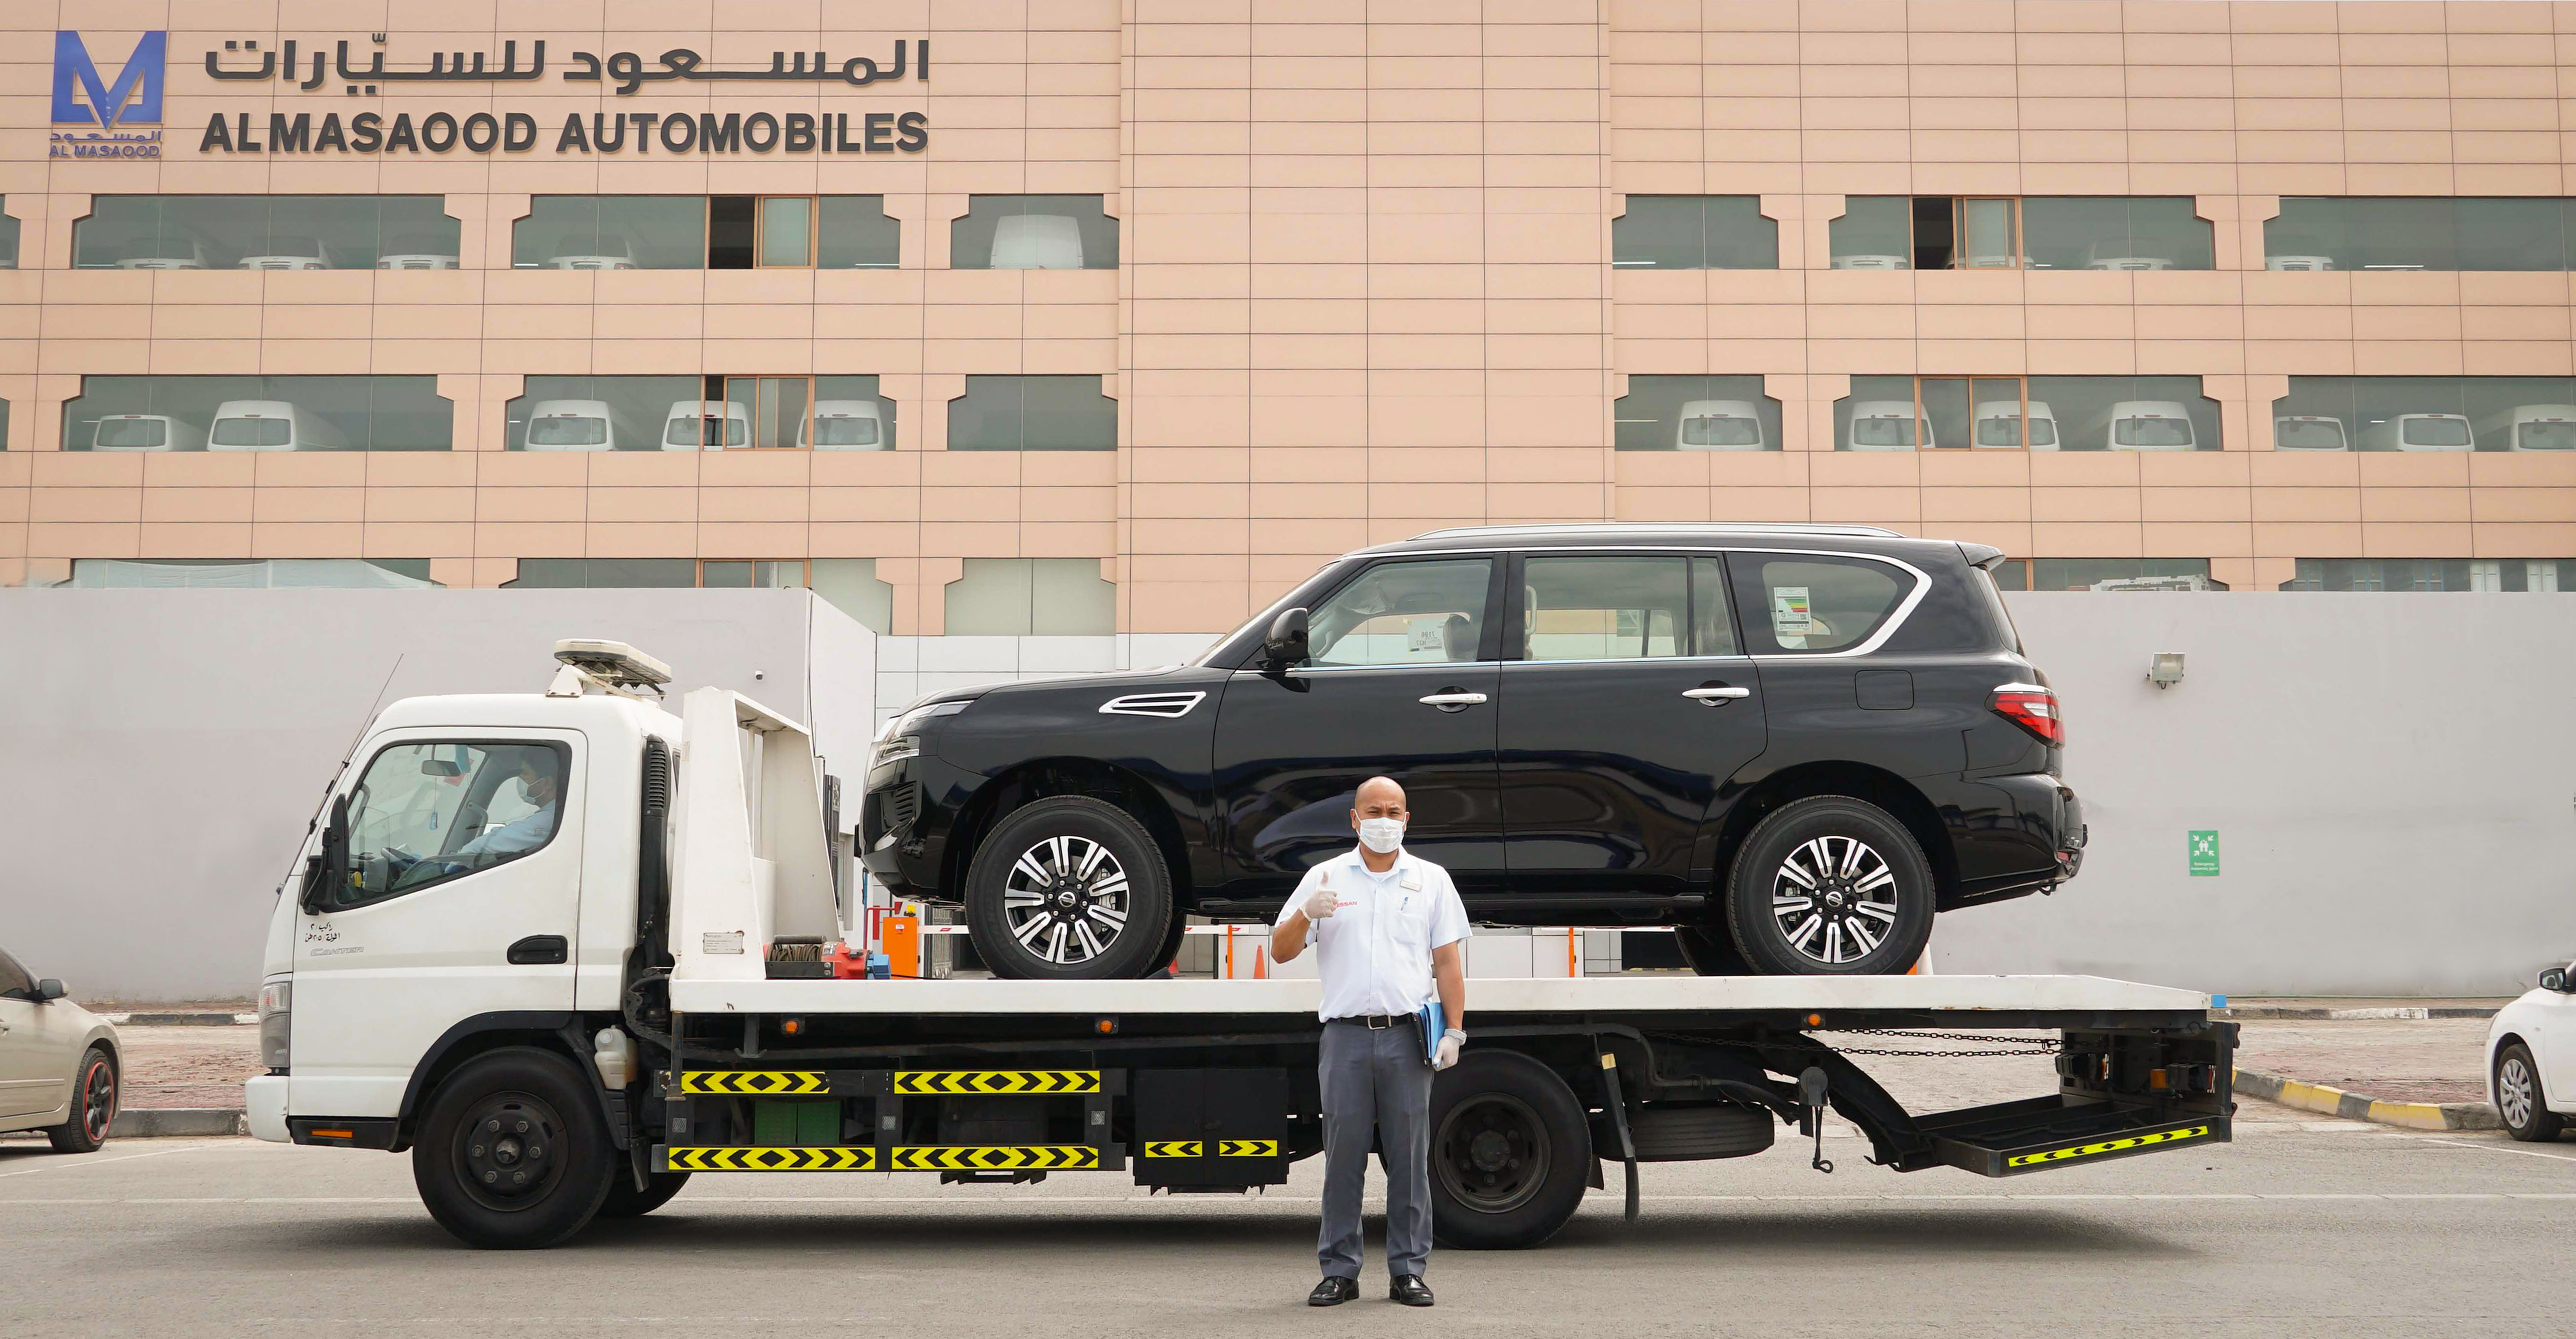 Al Masaood Automobiles provides customer-convenient vehicle pickup and delivery service